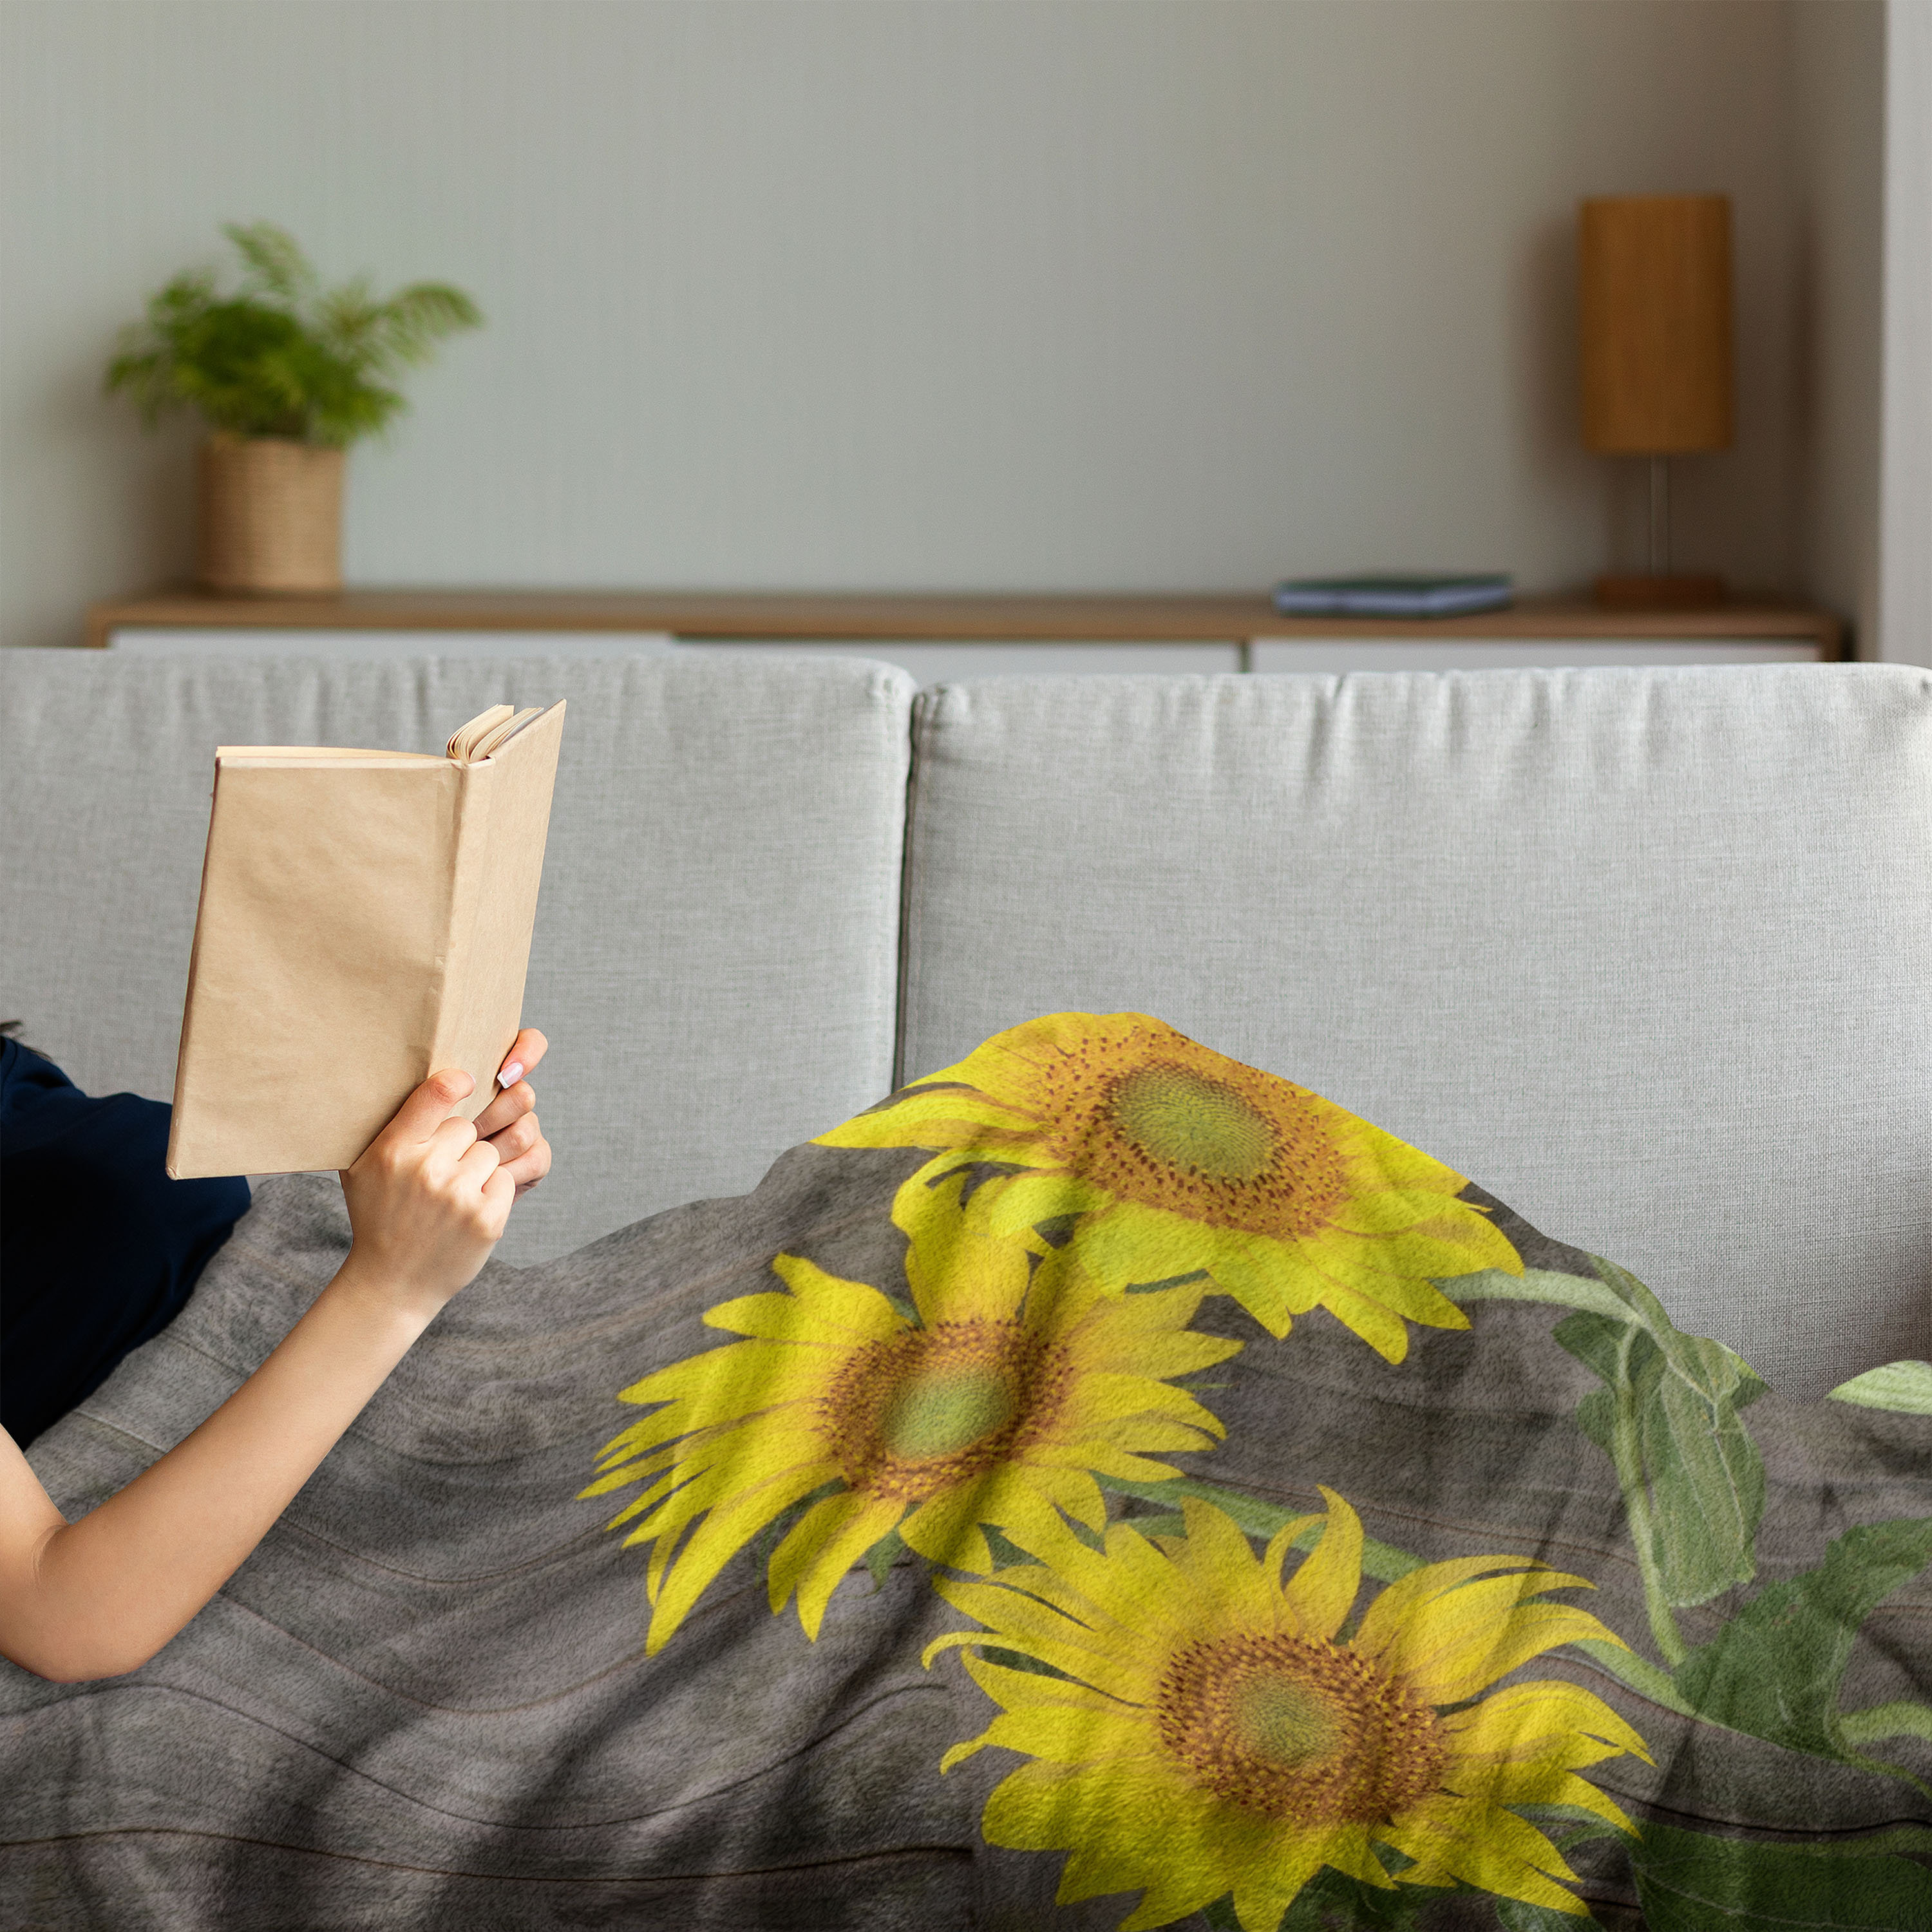 Sunflowers Blanket Warm Soft Fleece Throw Plush Sofa Couch Warm Bedding Home Decor Gift Idea 60x80